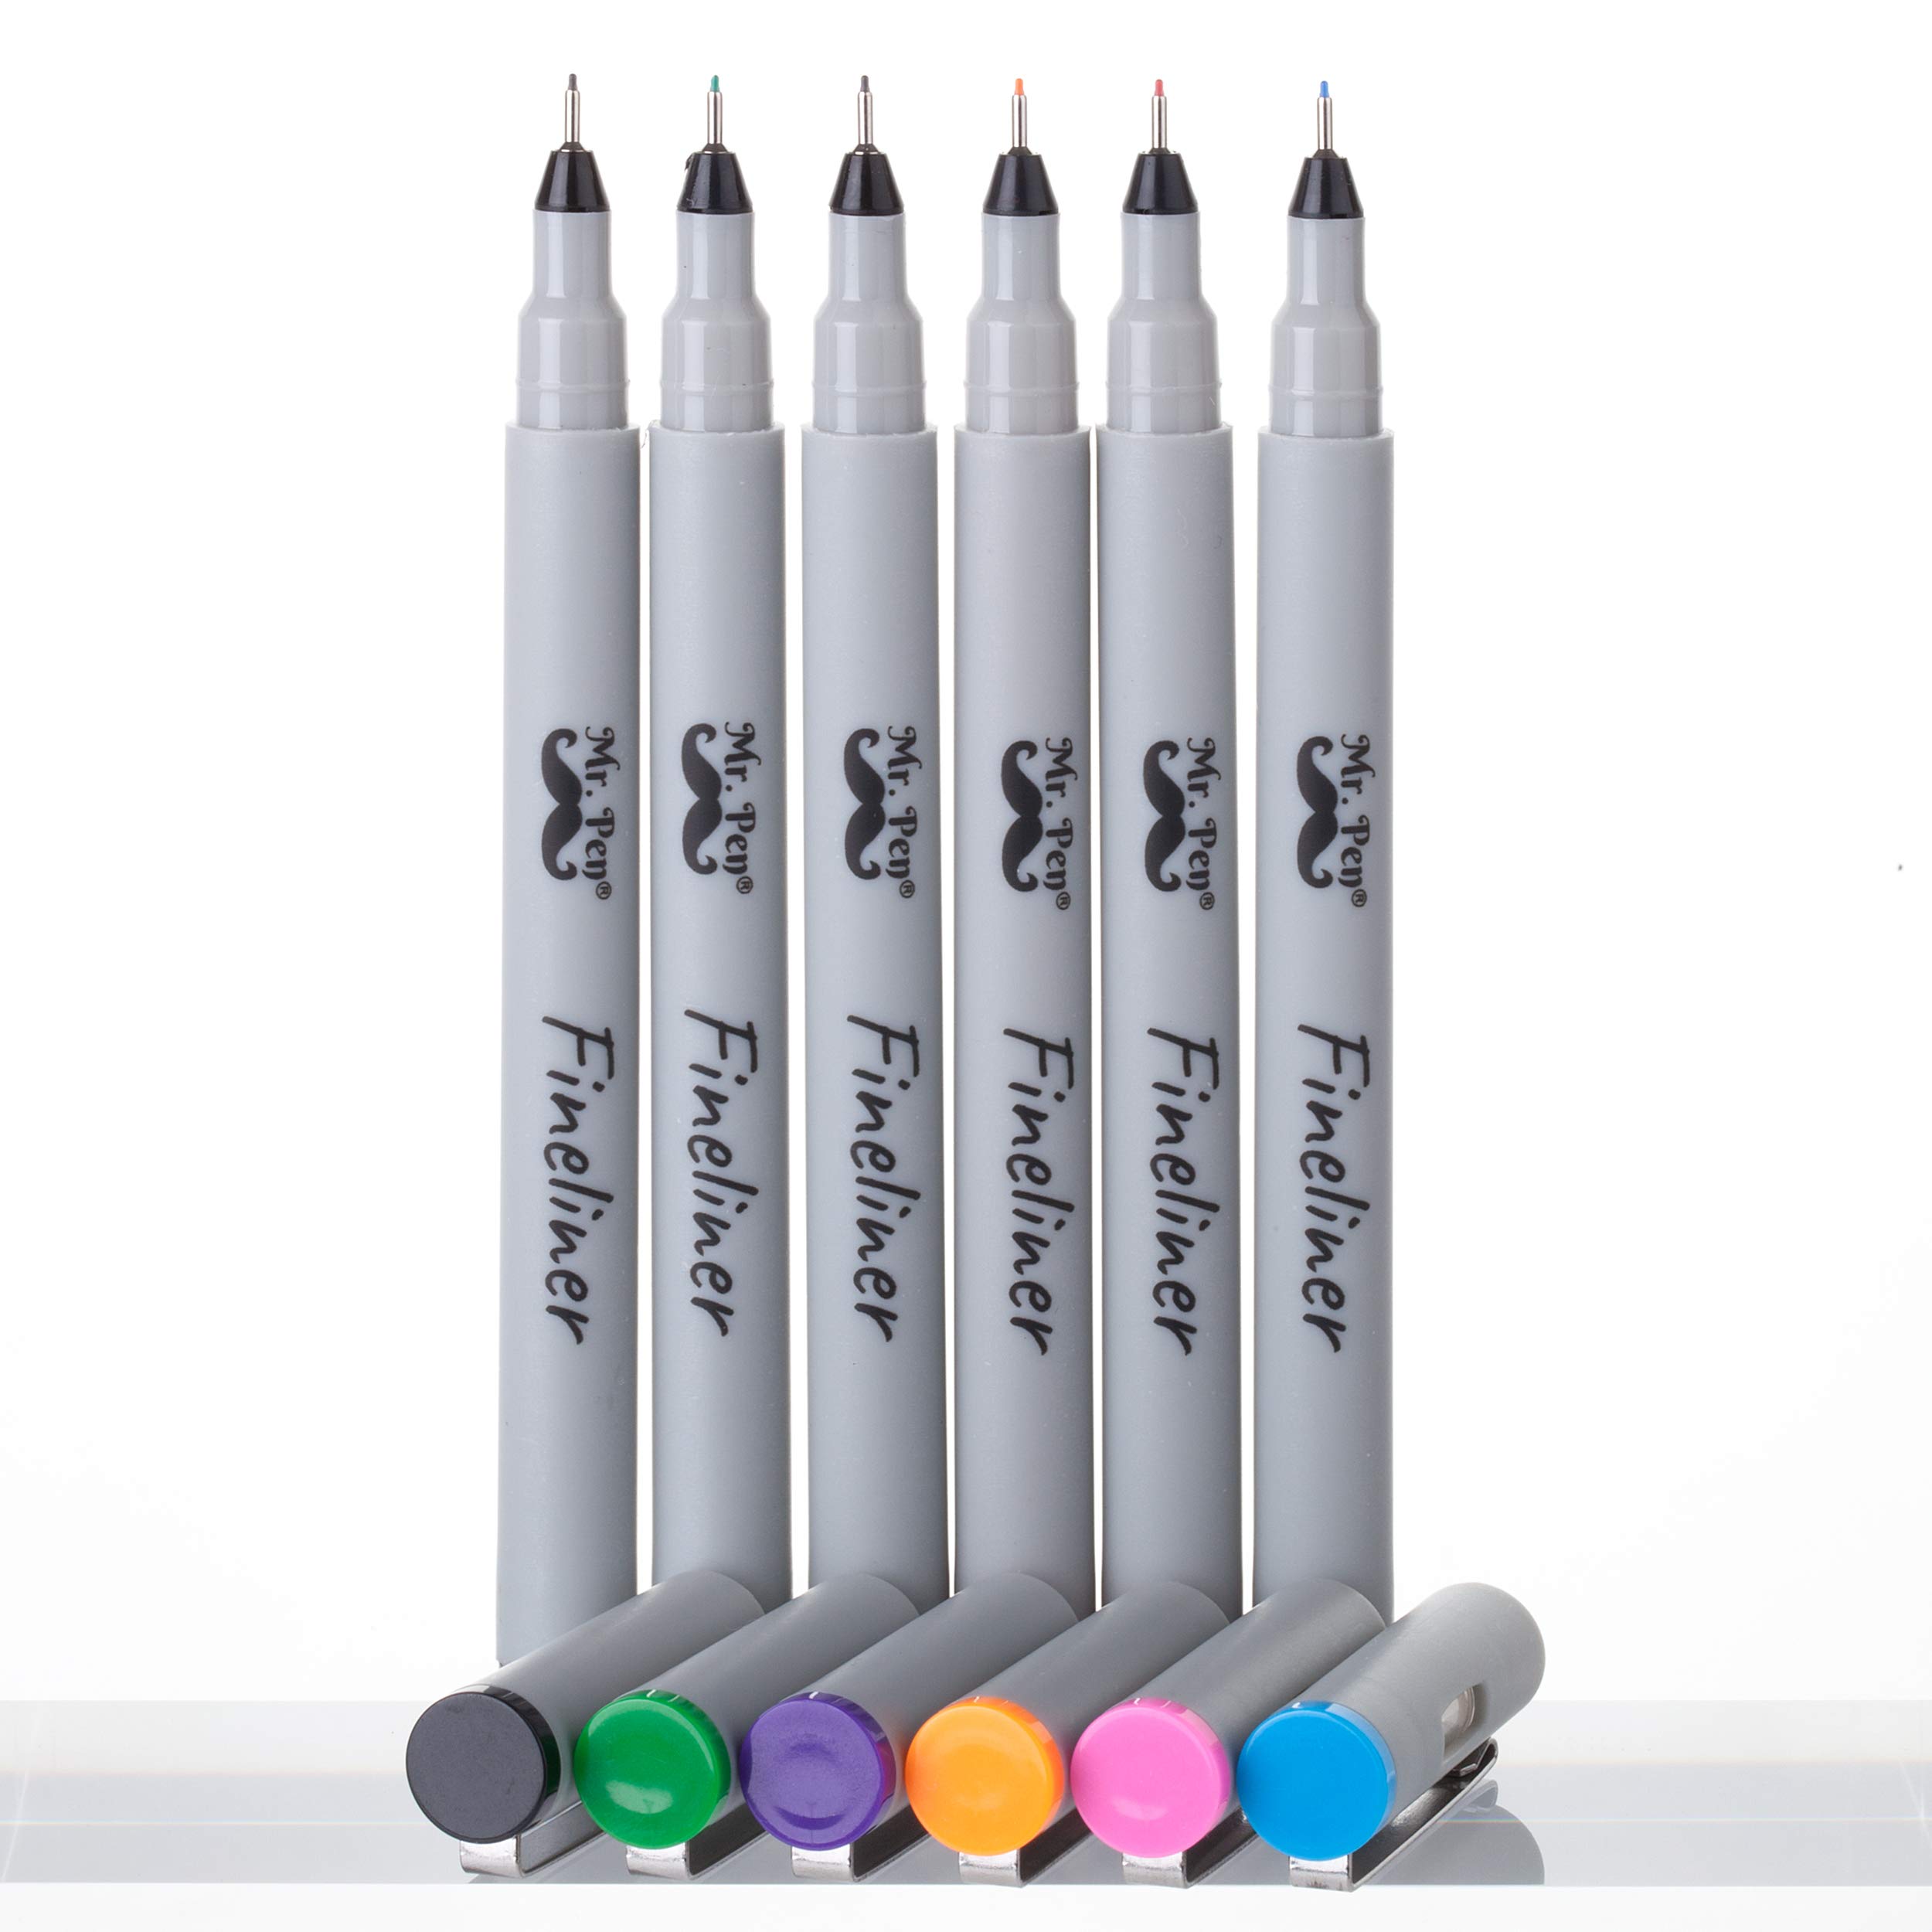 Mr. Pen- Fineliner Pastel Pens, 12 Pack, Pastel Colors, No Bleed Fine Point Pen, No Smudge Fine Tip Markers, Bible / Journal Pens, Drawing / Note